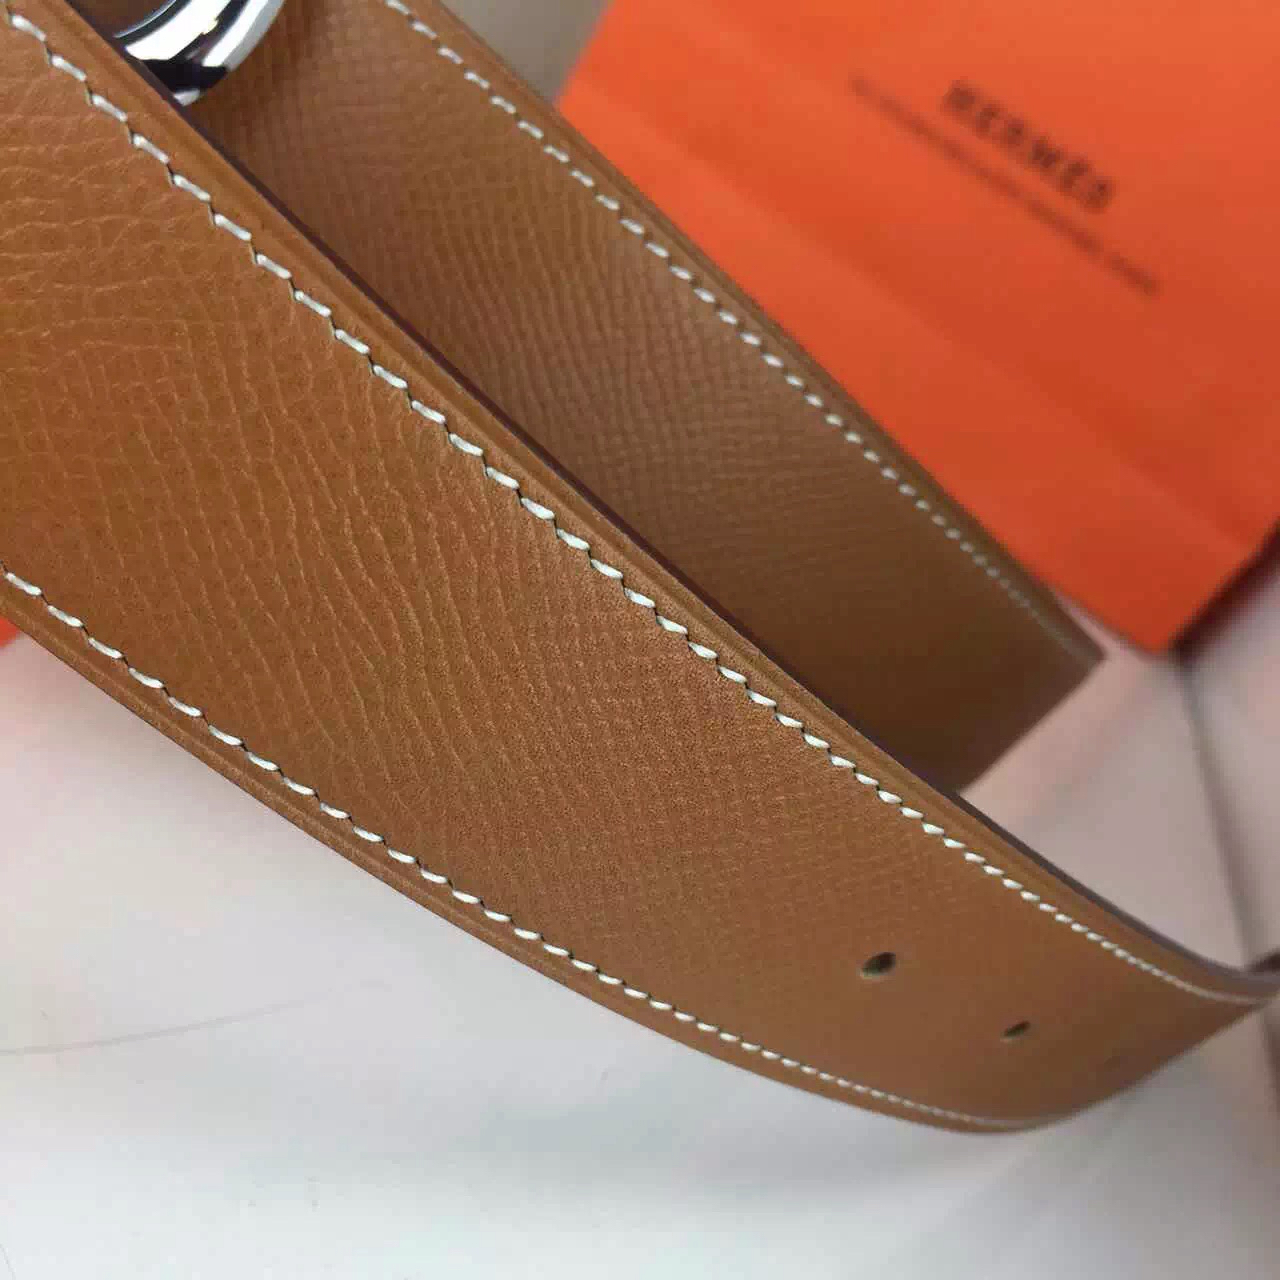 Hermes爱马仕皮带货源 扣头设计新颖 棕色掌纹